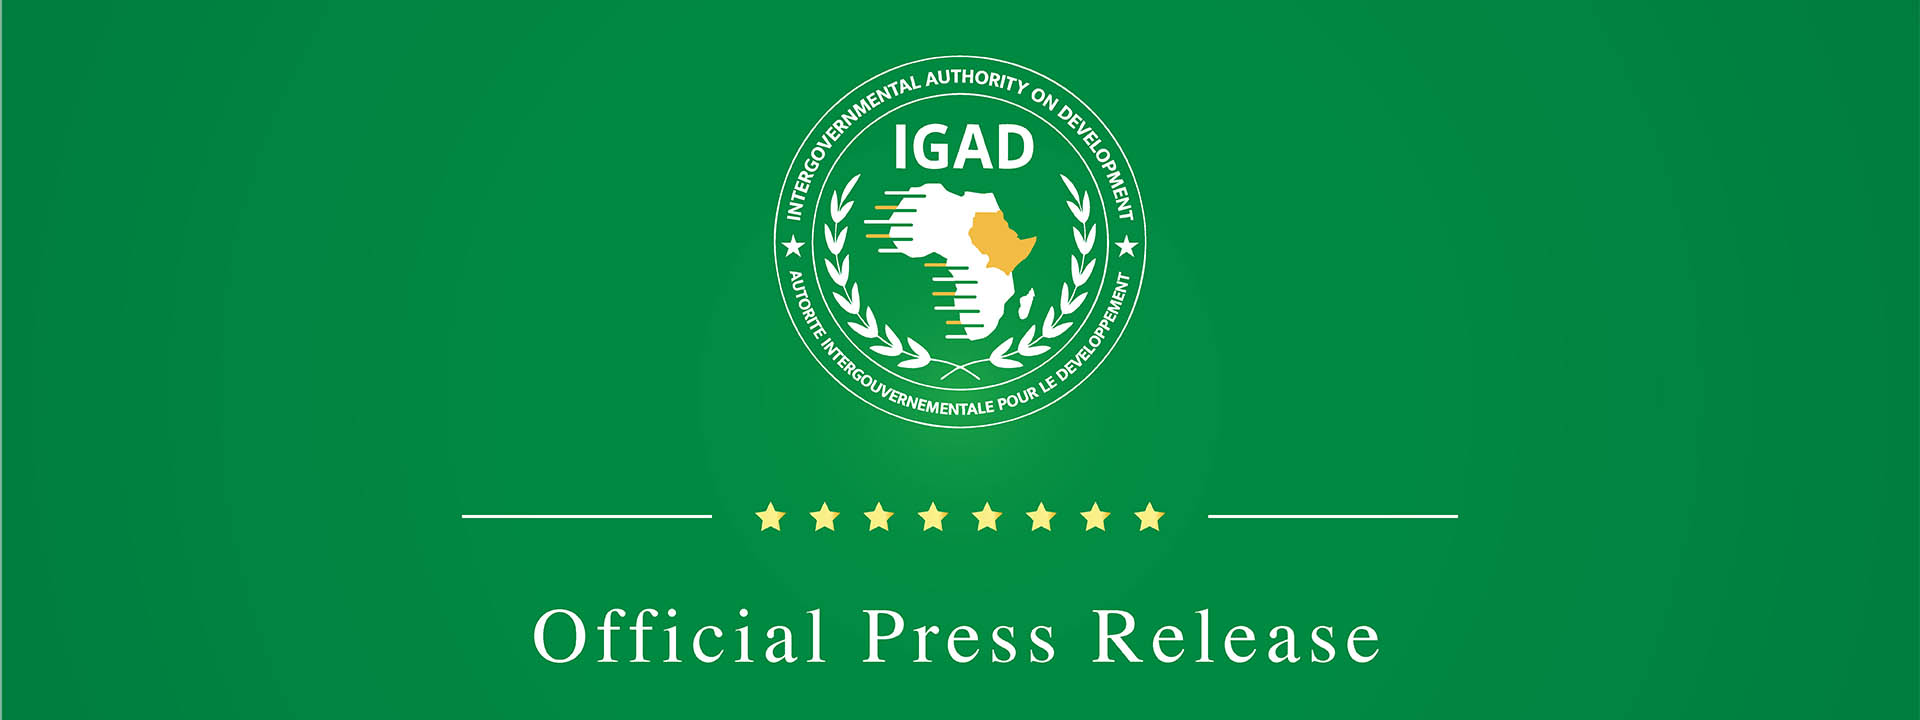 IGAD Executive Secretary Congratulates the New President of Somalia